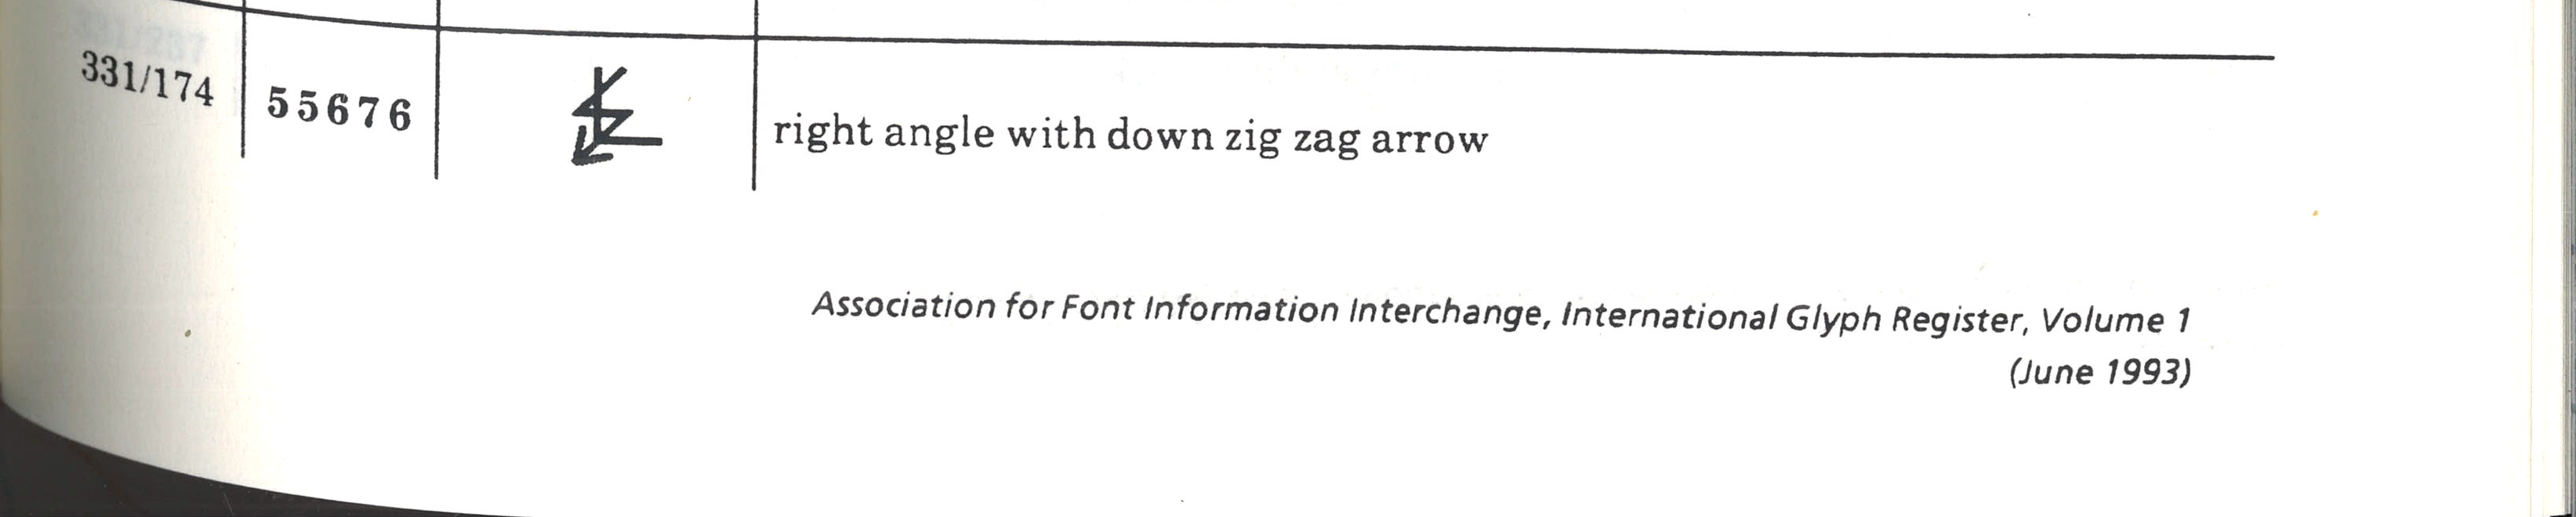 331/174 55676 right angle with down zig zag arrow
Association for Font Information Interchange, International Glyph Register, Volume 1 (June 1993)